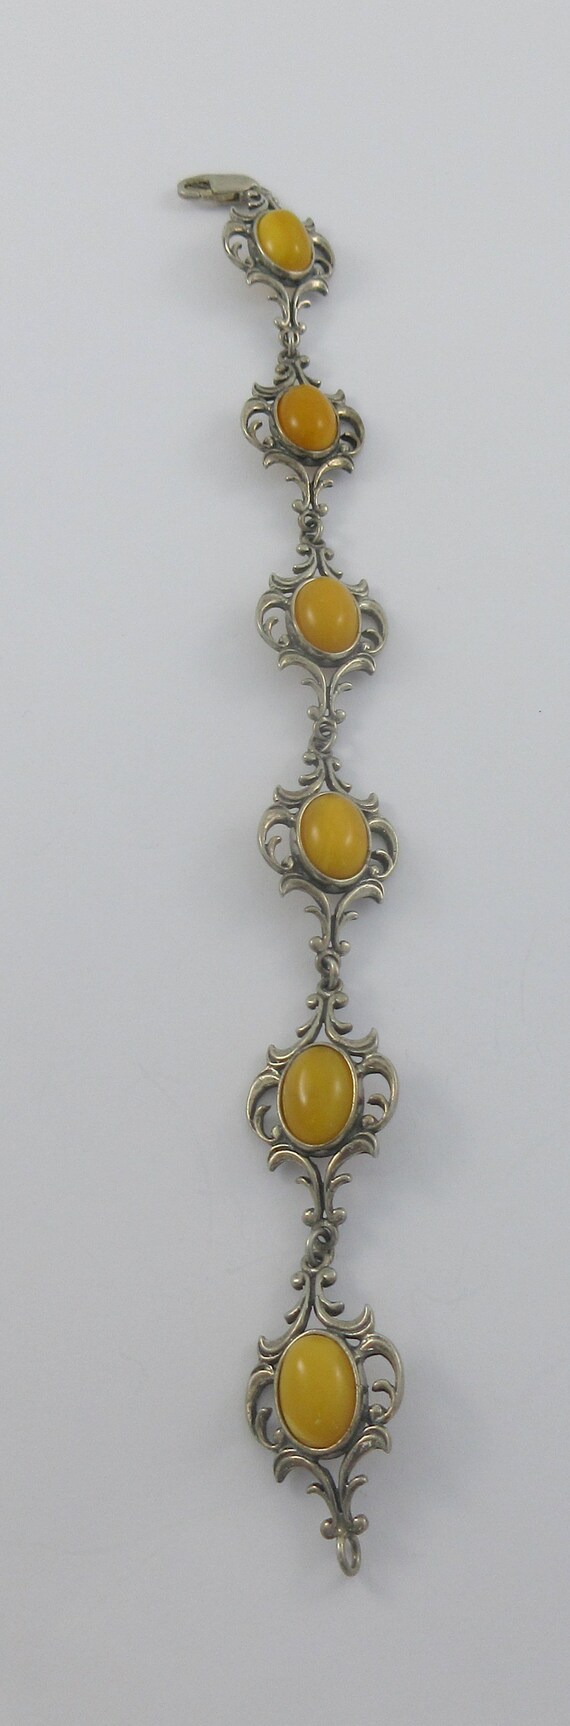 Art Nouveau Style Sterling Silver Amber Bracelet - image 7